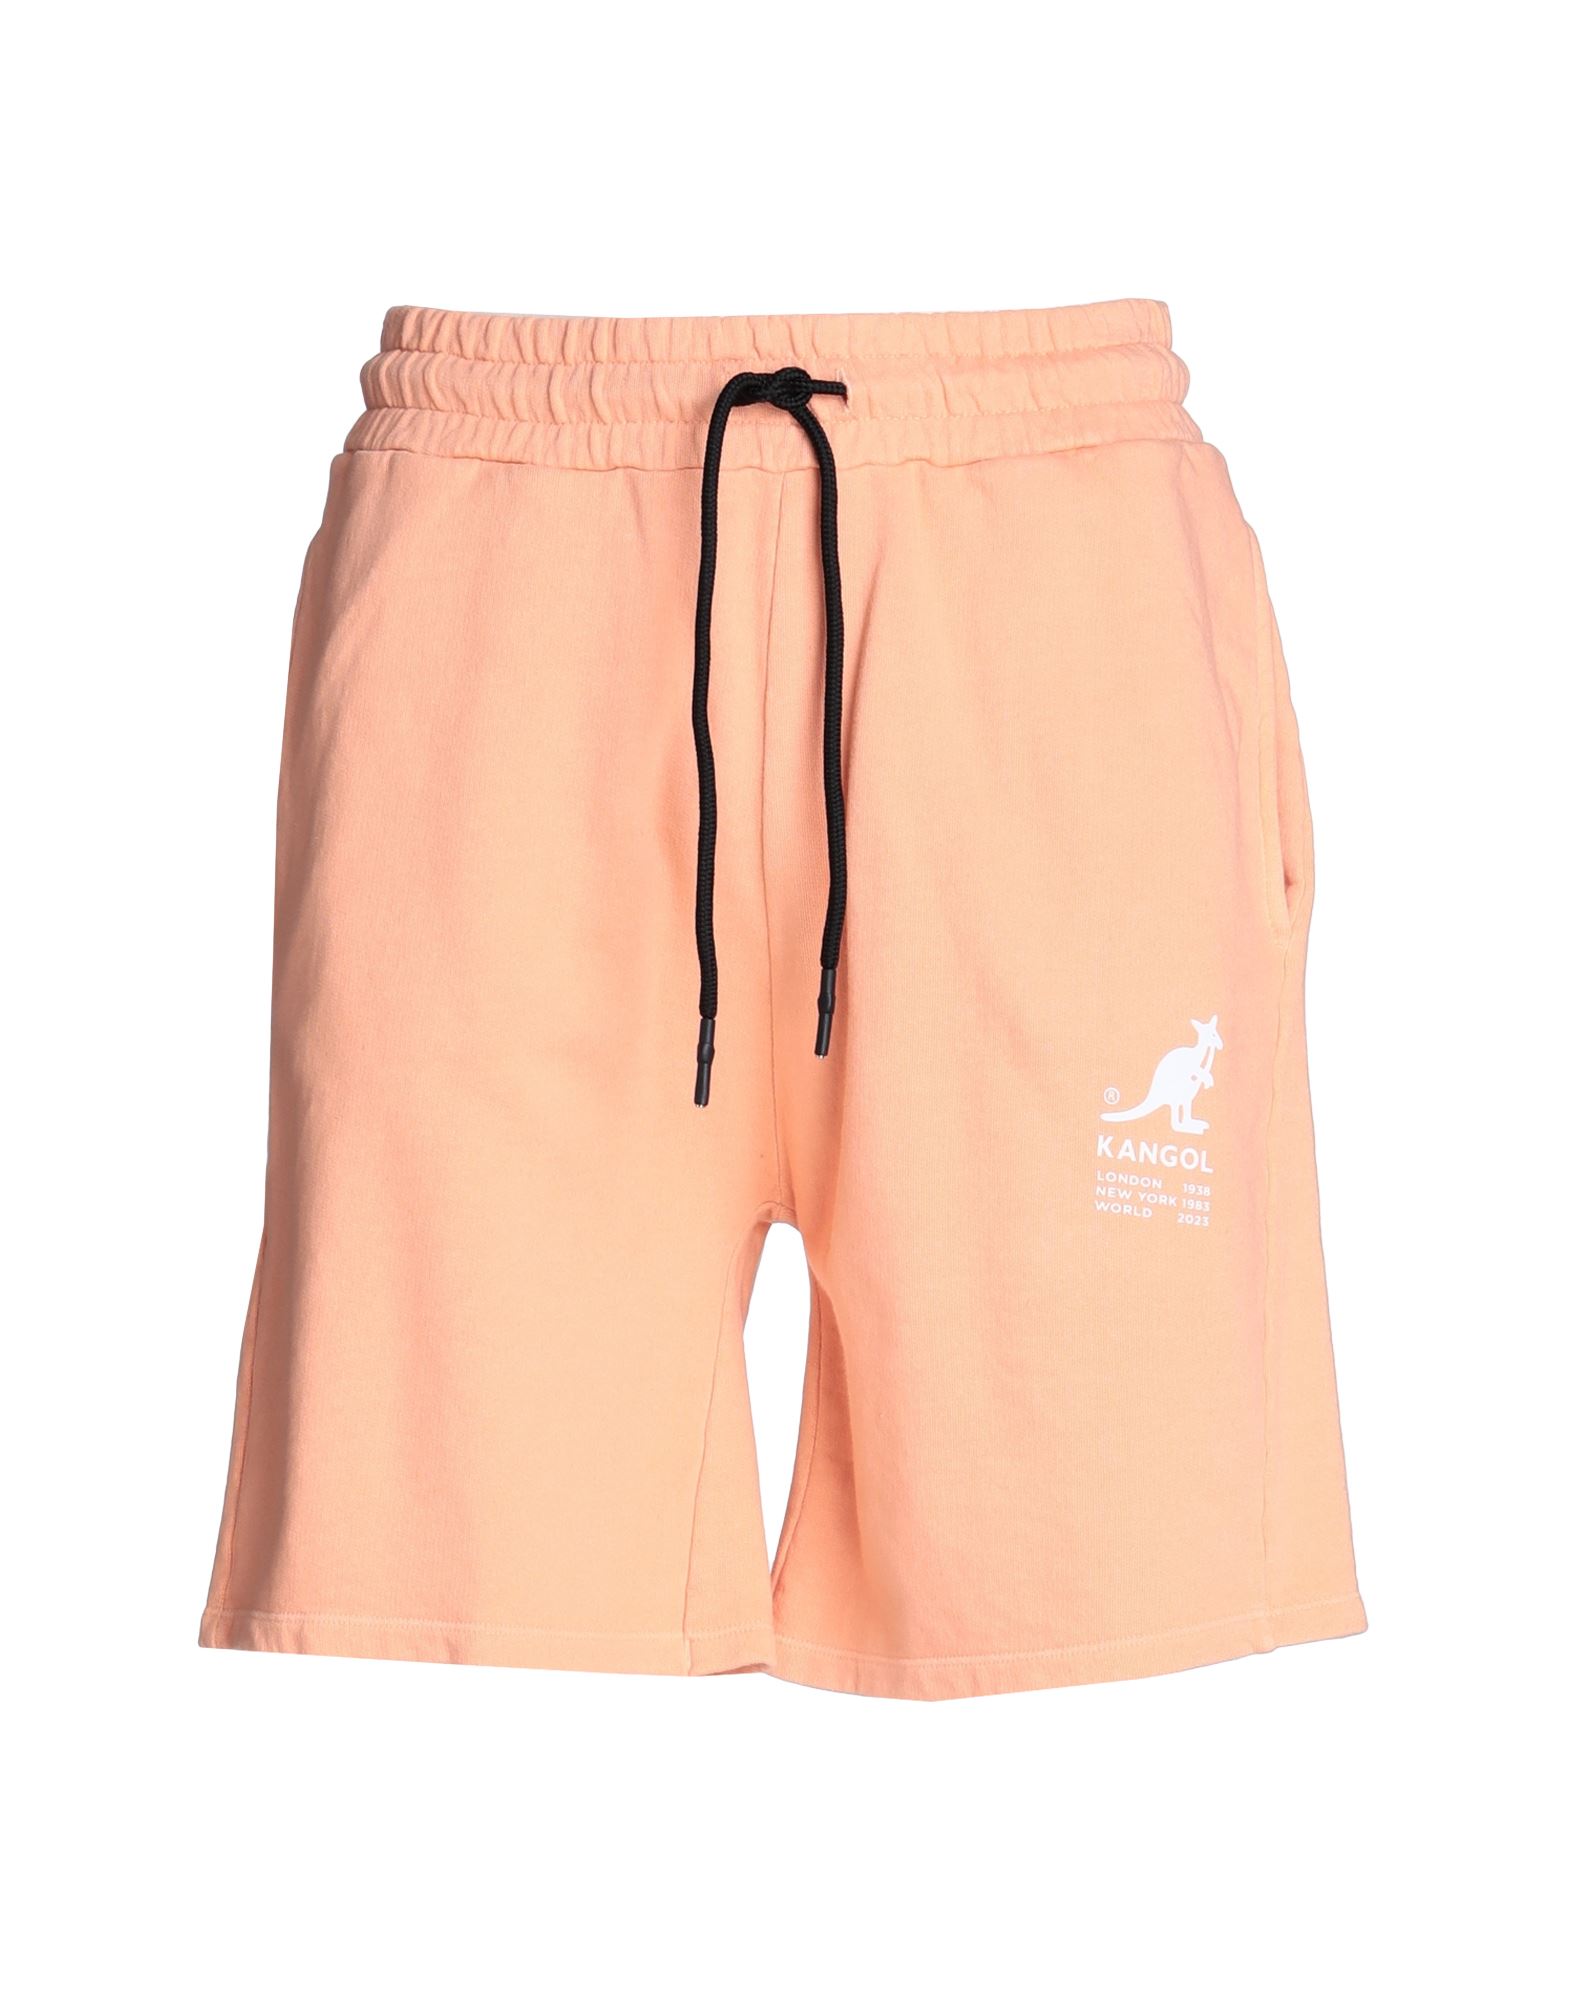 KANGOL Shorts & Bermudashorts Herren Lachs von KANGOL